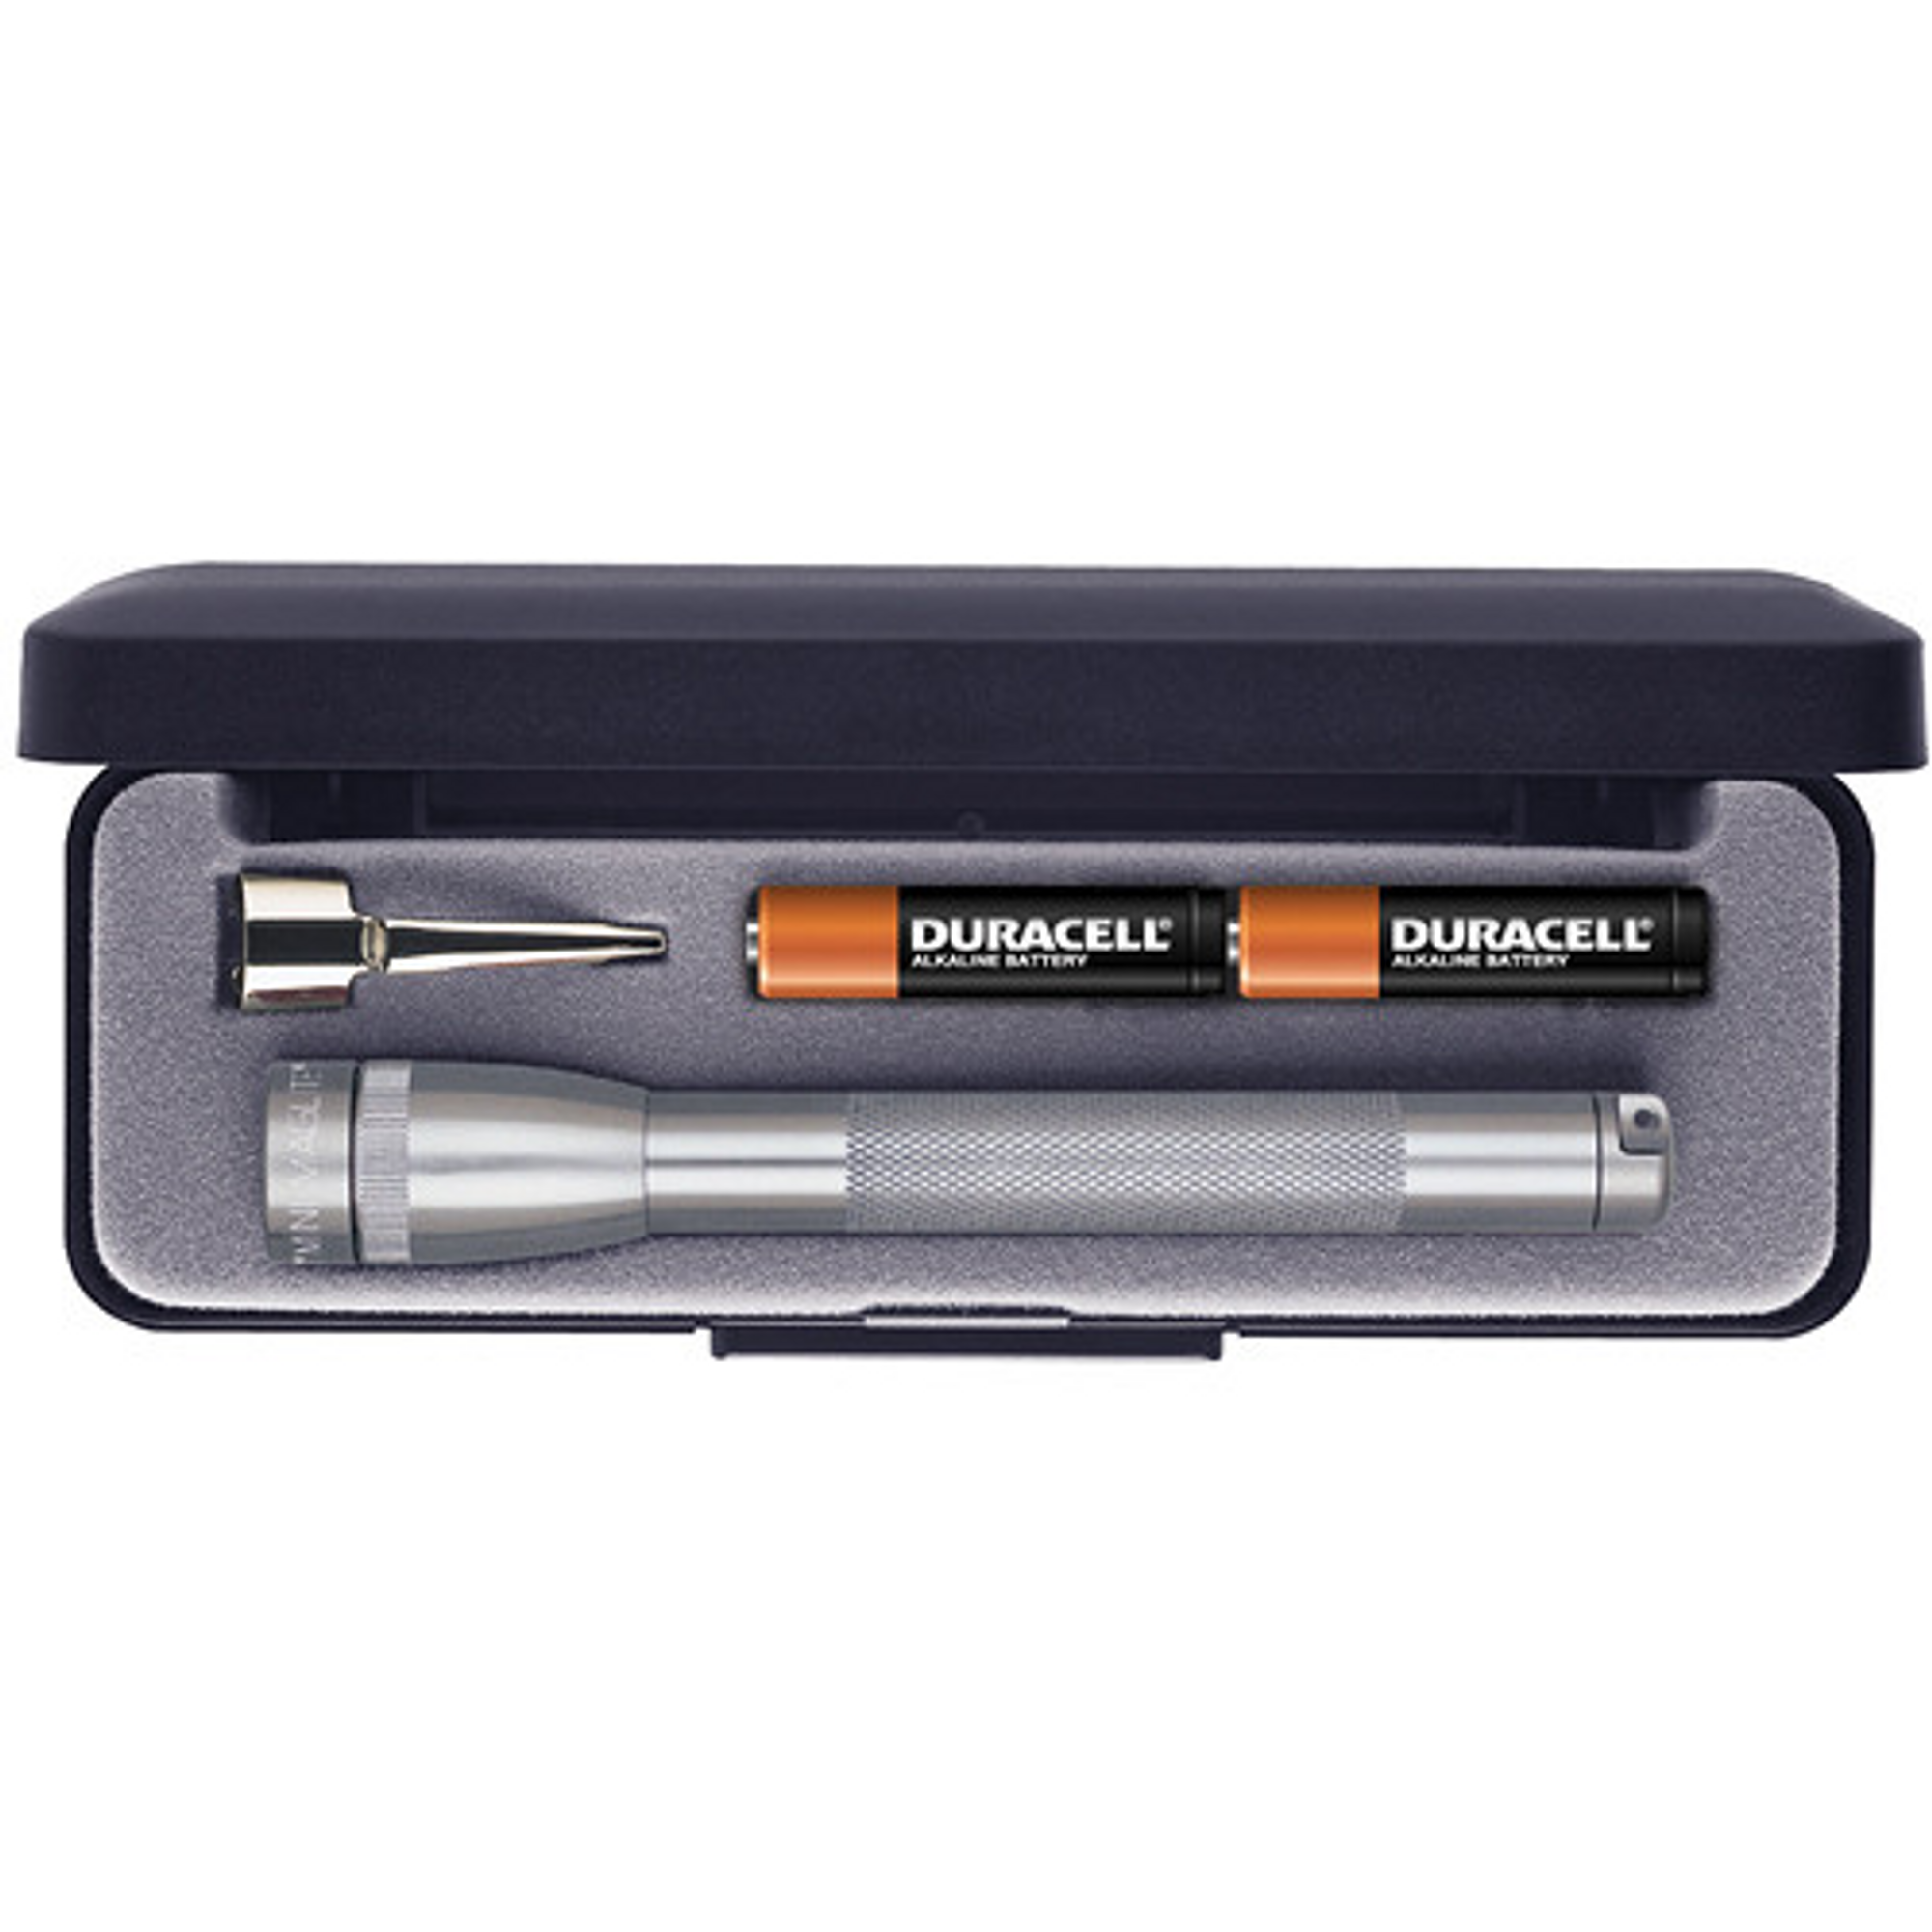 Sp22 Mini Maglite 2 Aaa-cell Led Flashlight W/ Pocket Clip - KRM3A092